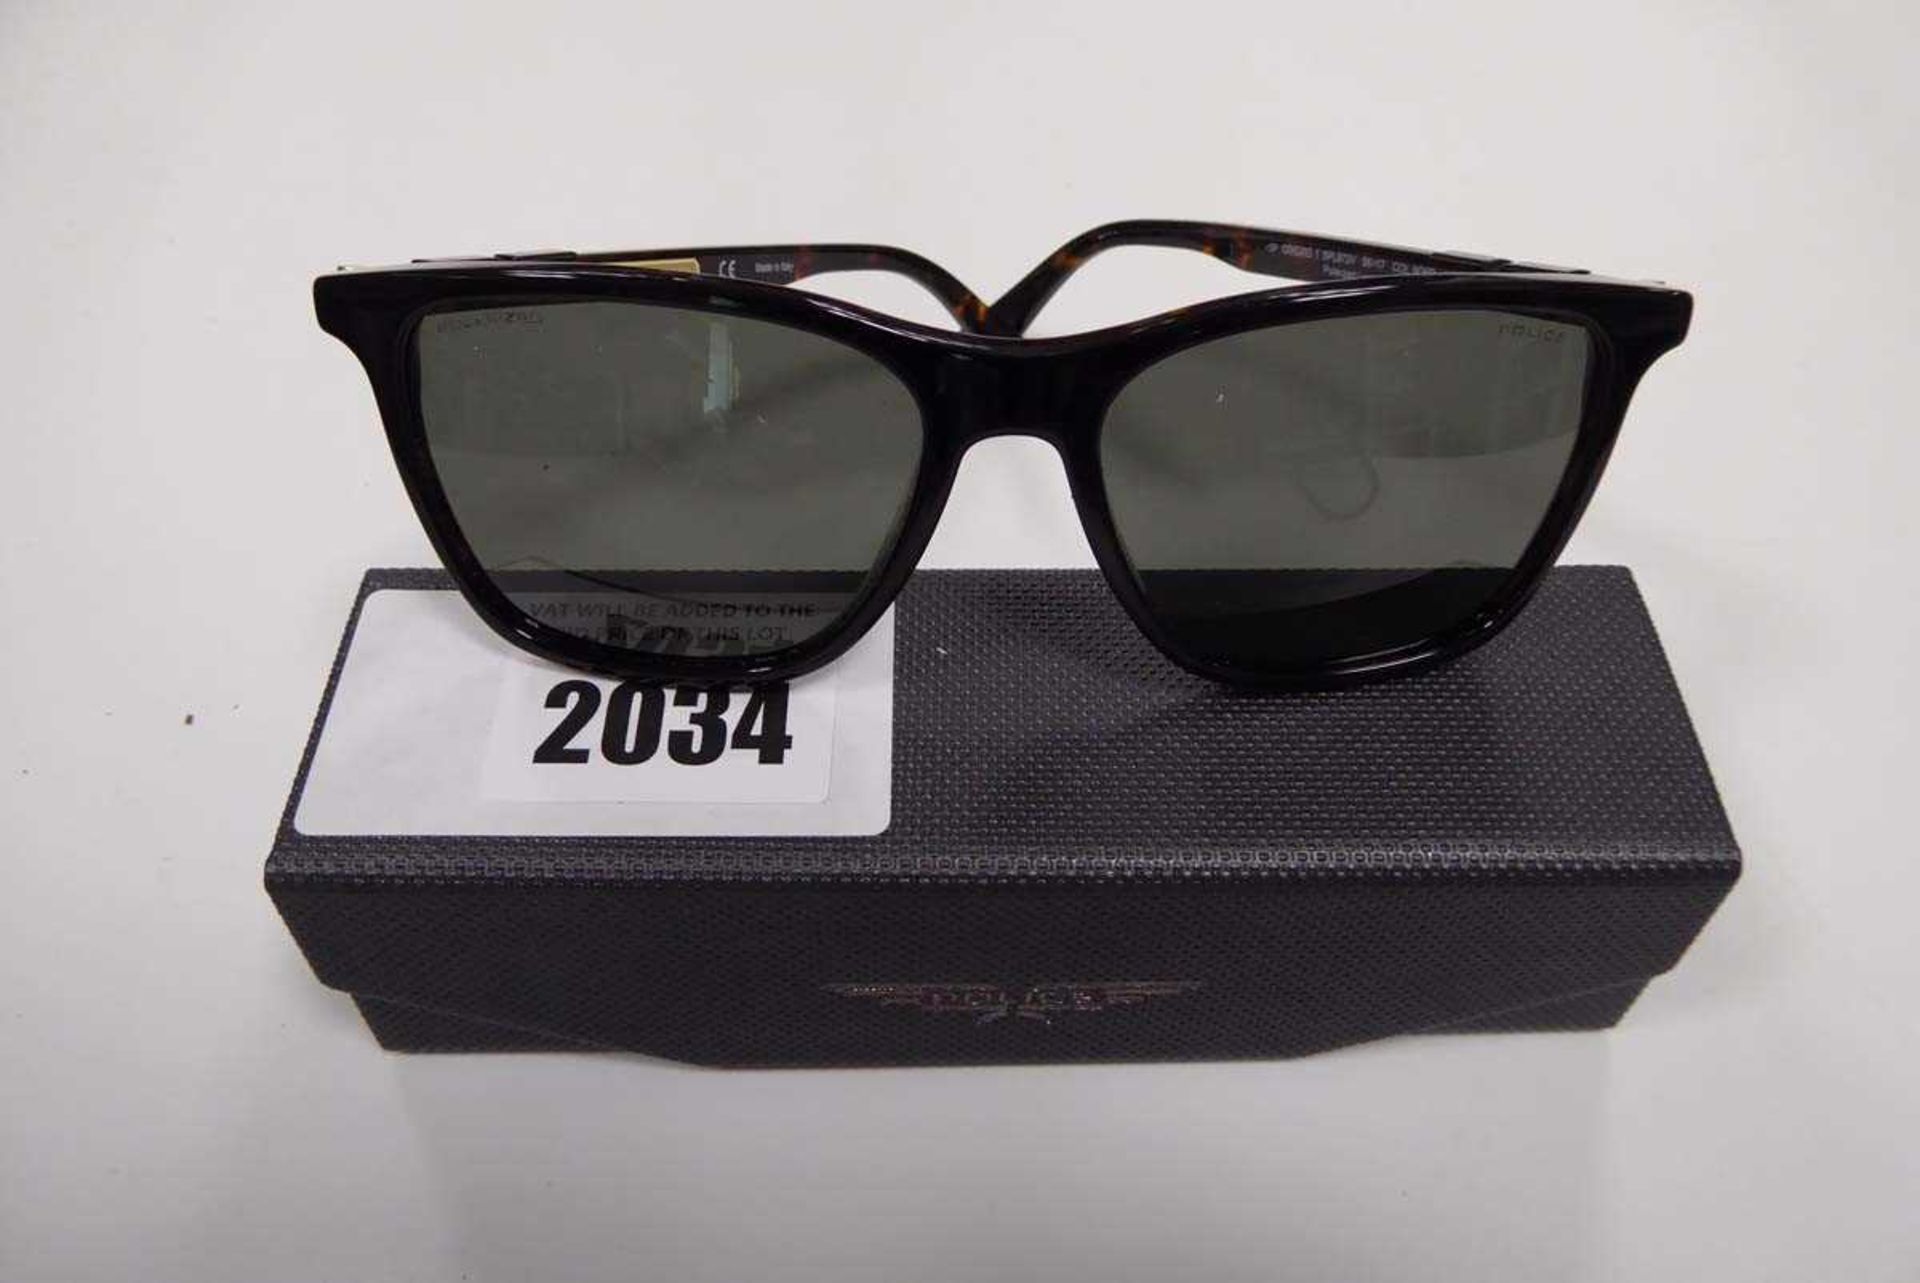 Police gents sunglasses with polarized lenses, model No. ORIGINS1SPL872V colour 9D6P